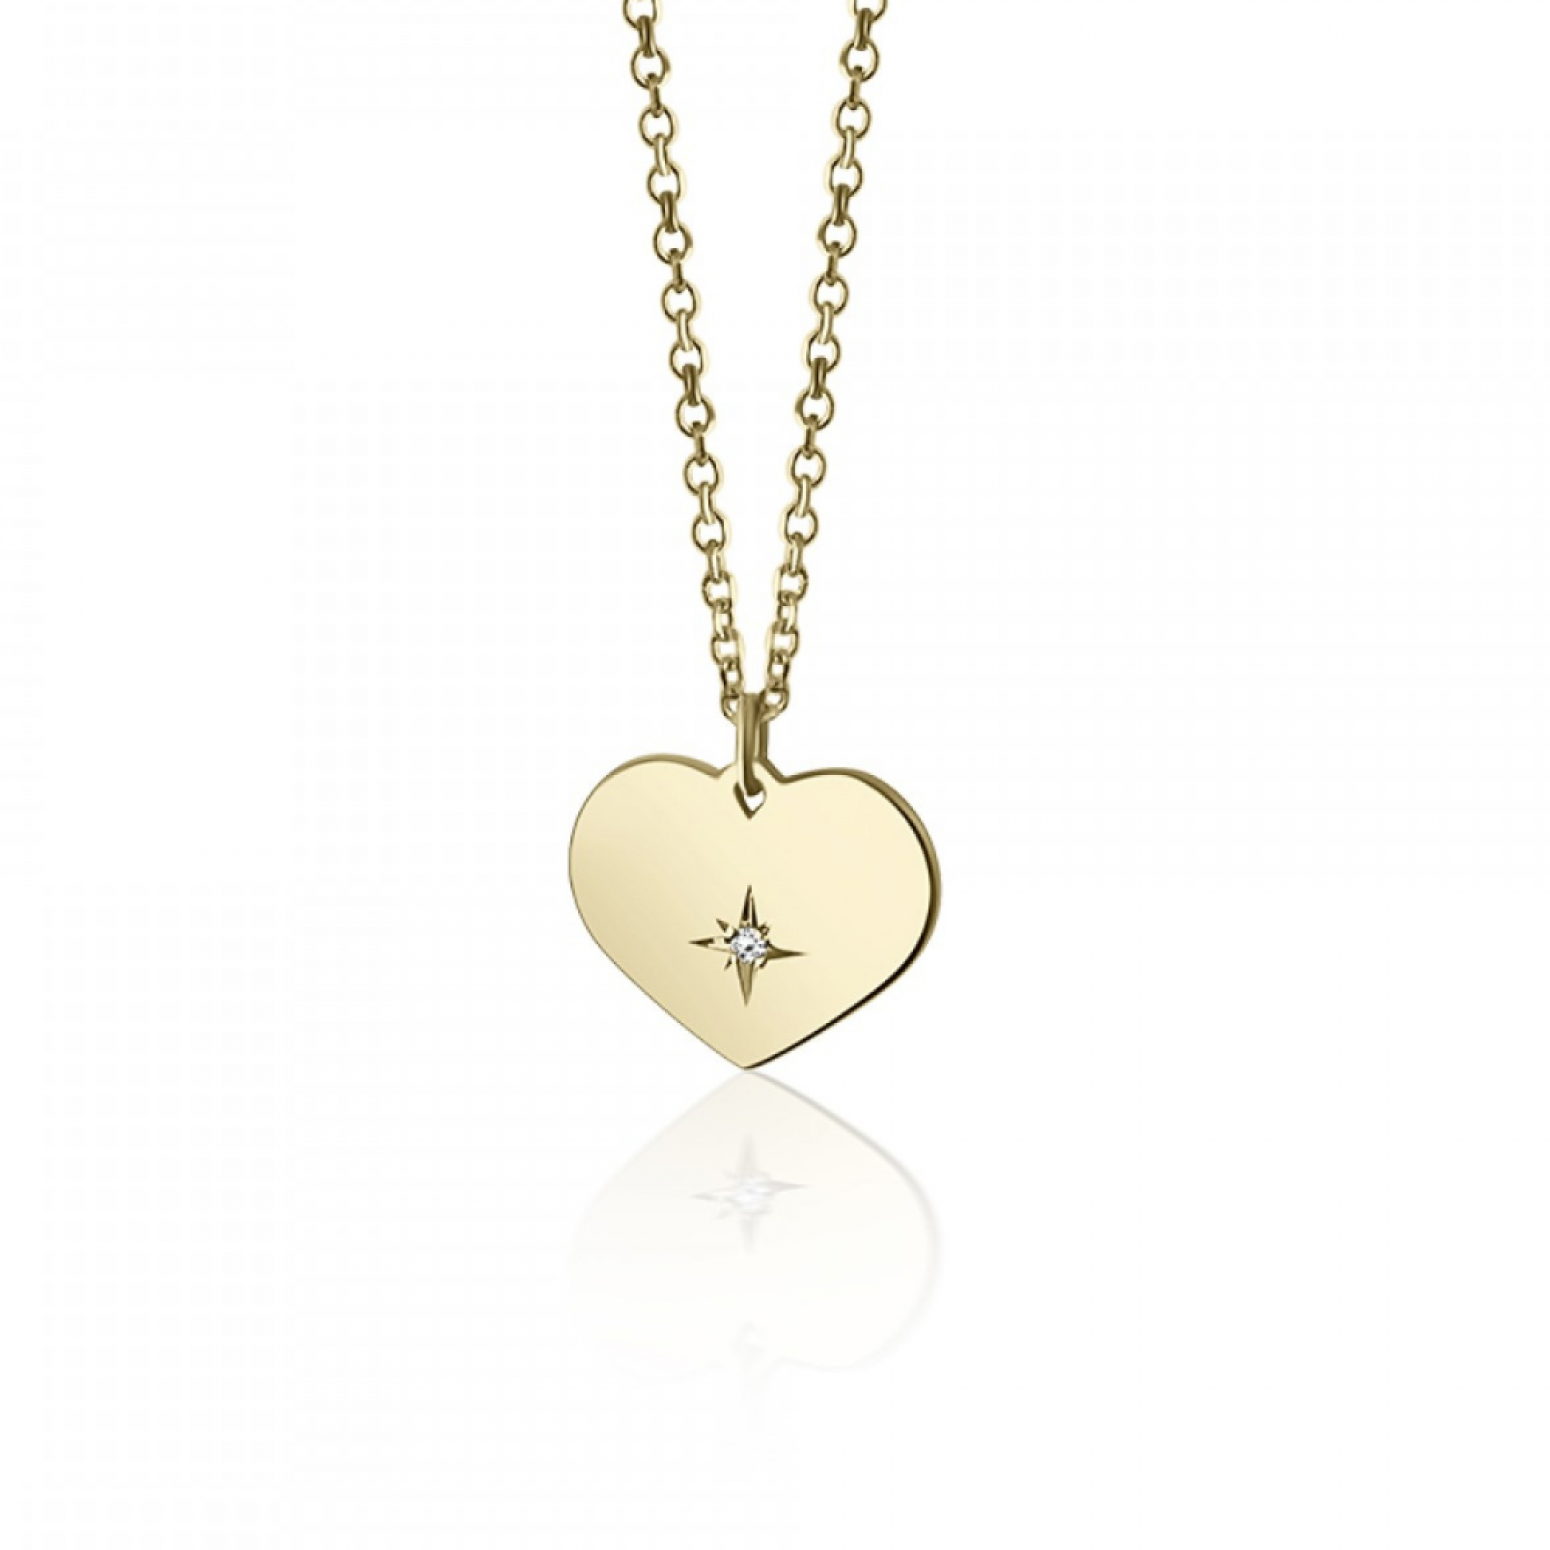 Heart necklace, Κ14 gold with diamond 0.003ct, VS2, H ko5611 NECKLACES Κοσμηματα - chrilia.gr